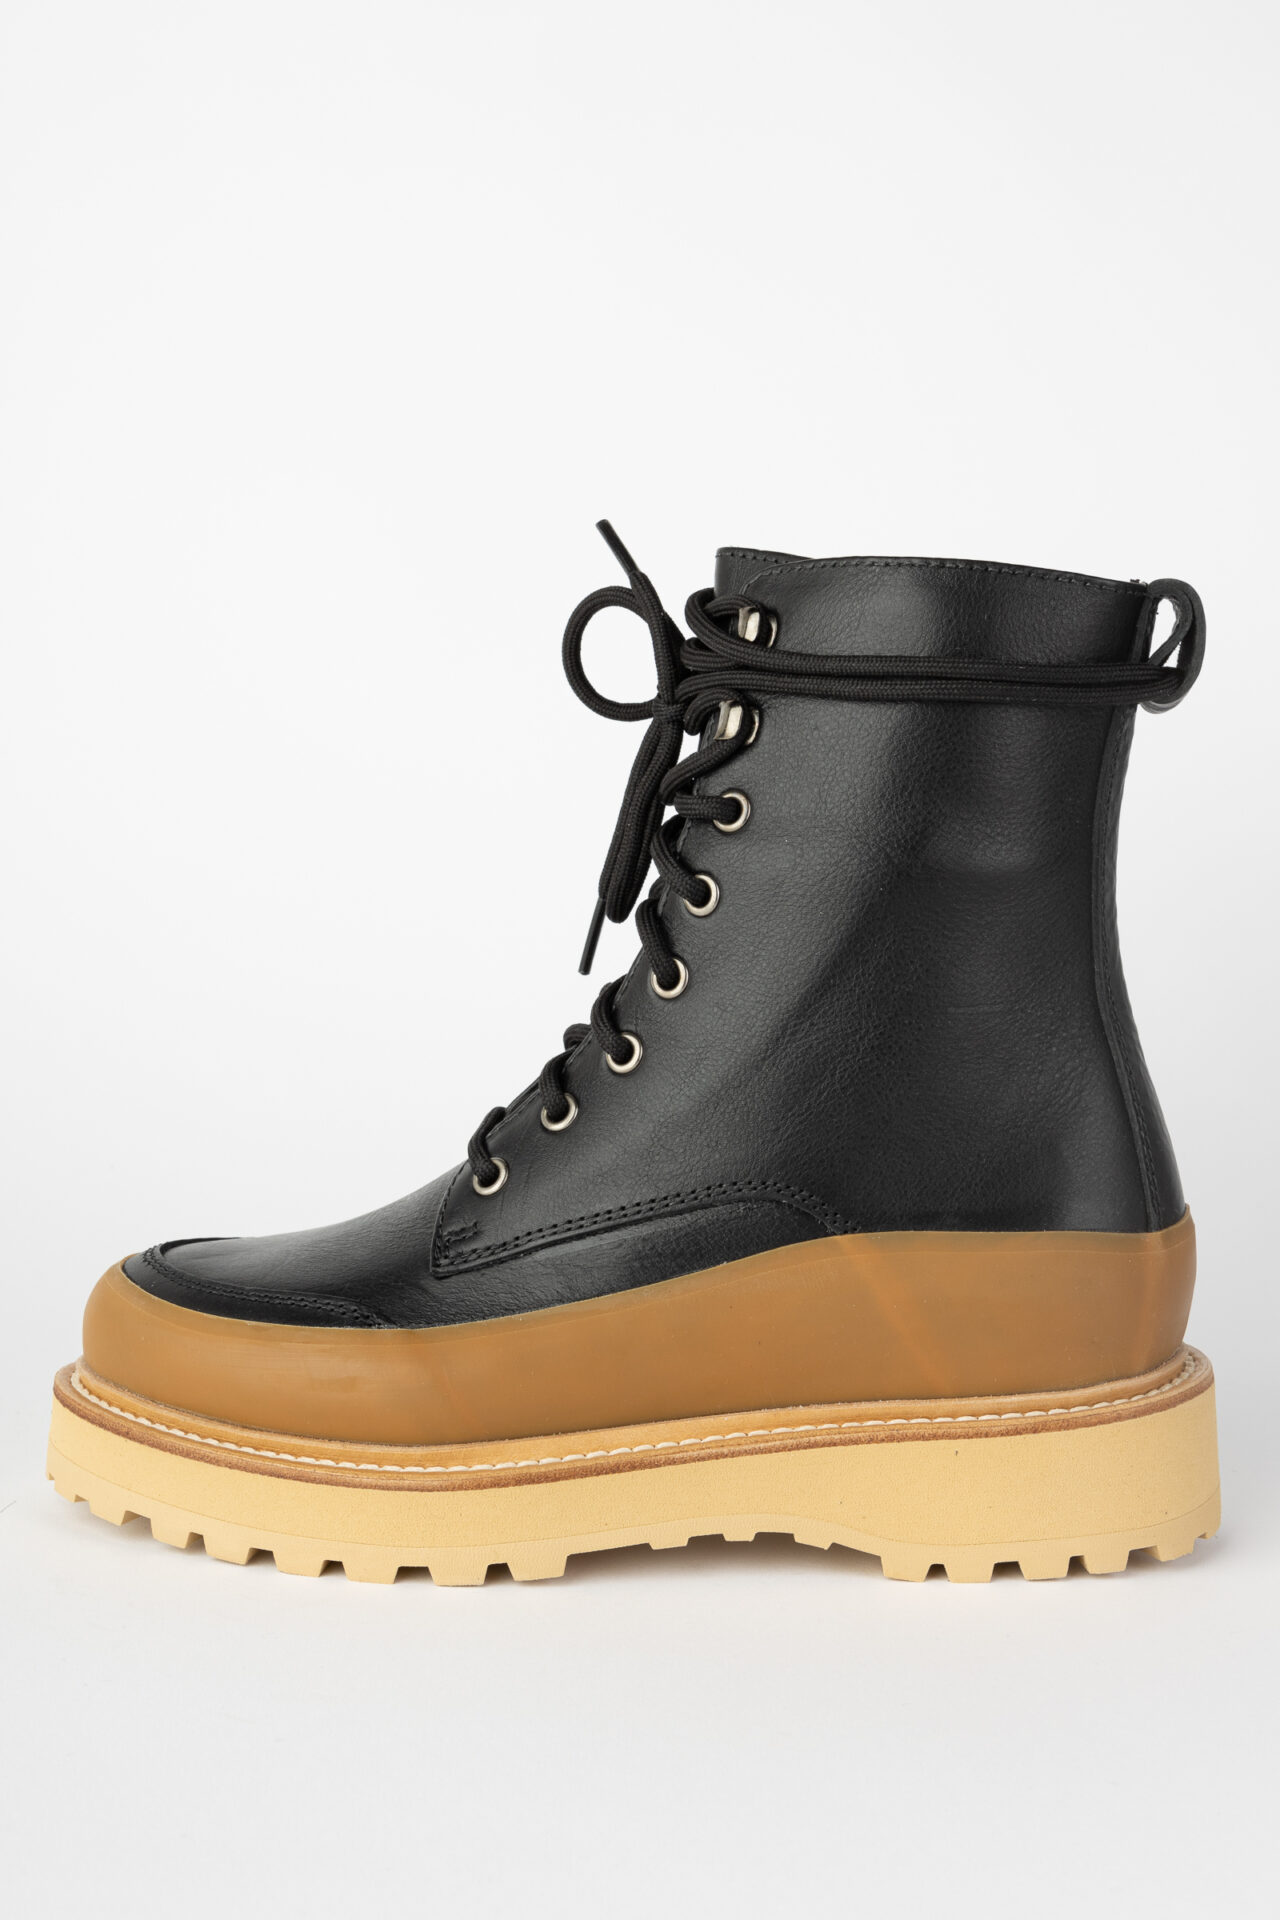 Ulla Johnson - Black leather boot 